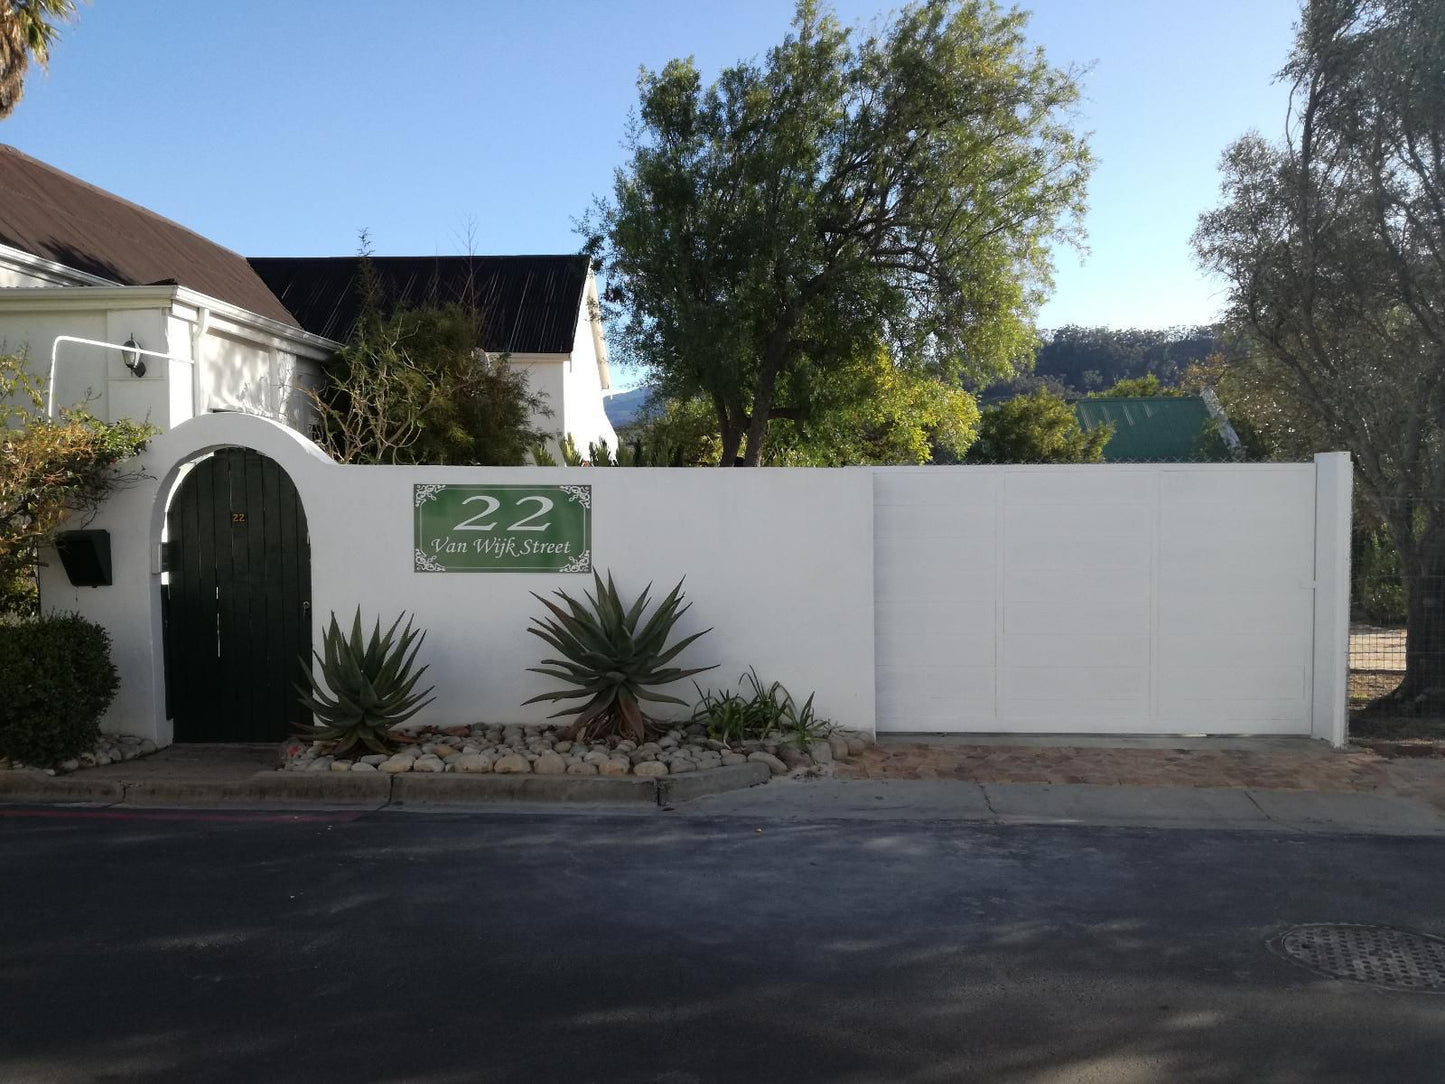 22 Van Wijk Street Franschhoek Franschhoek Western Cape South Africa House, Building, Architecture, Sign